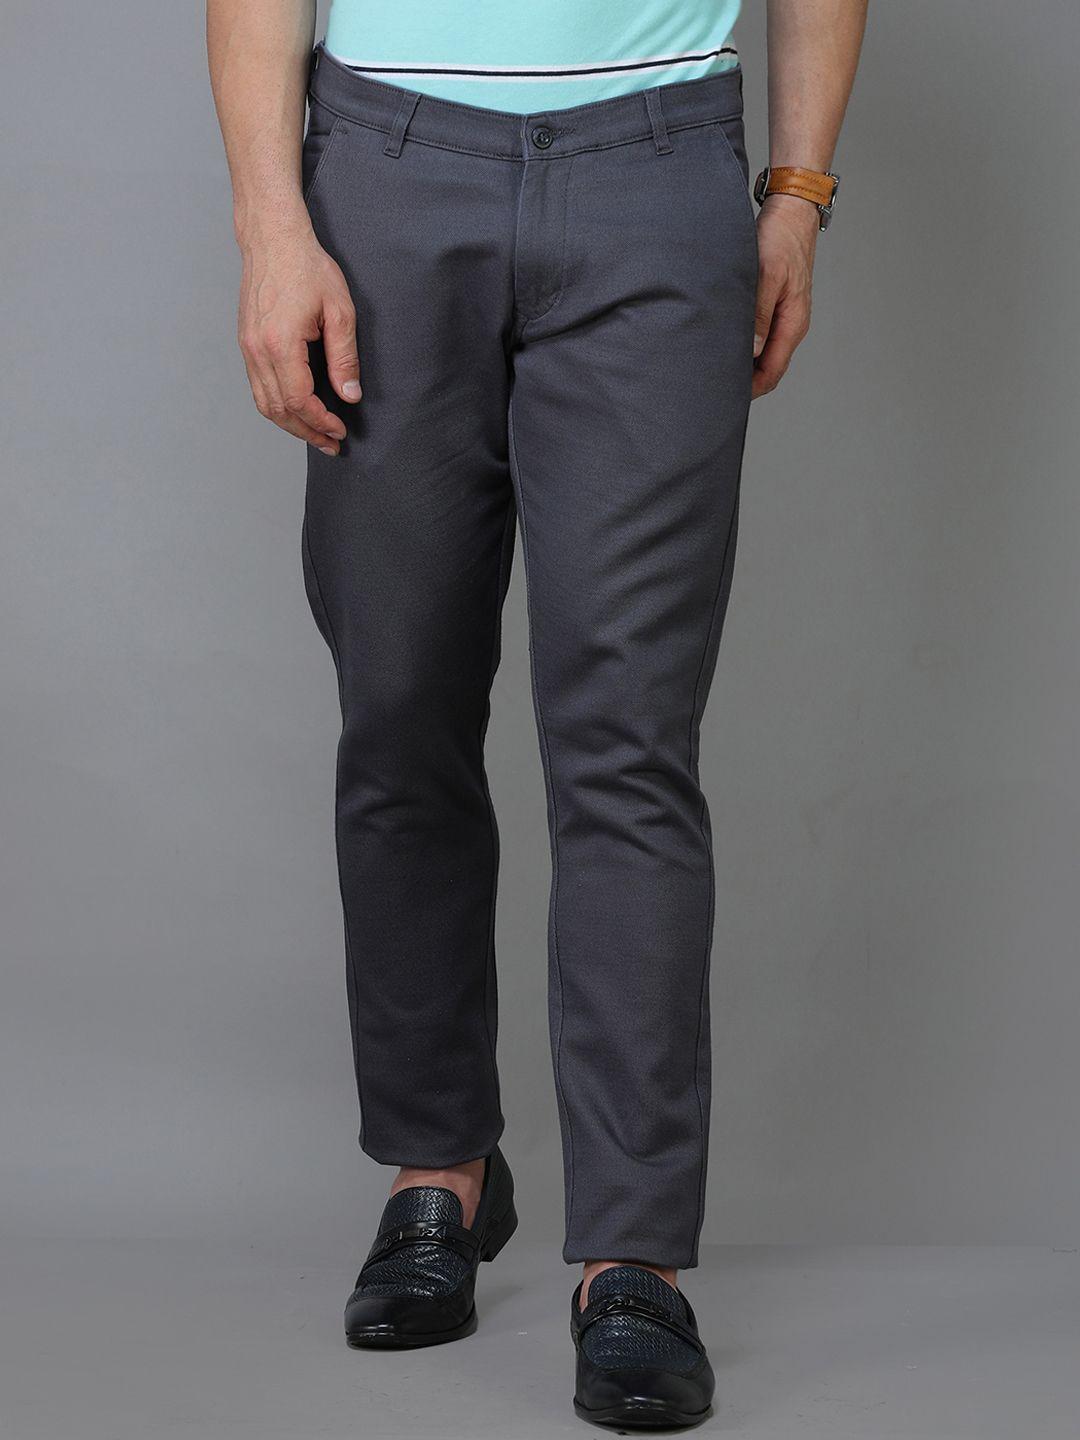 tqs-men-grey-comfort-chinos-trousers